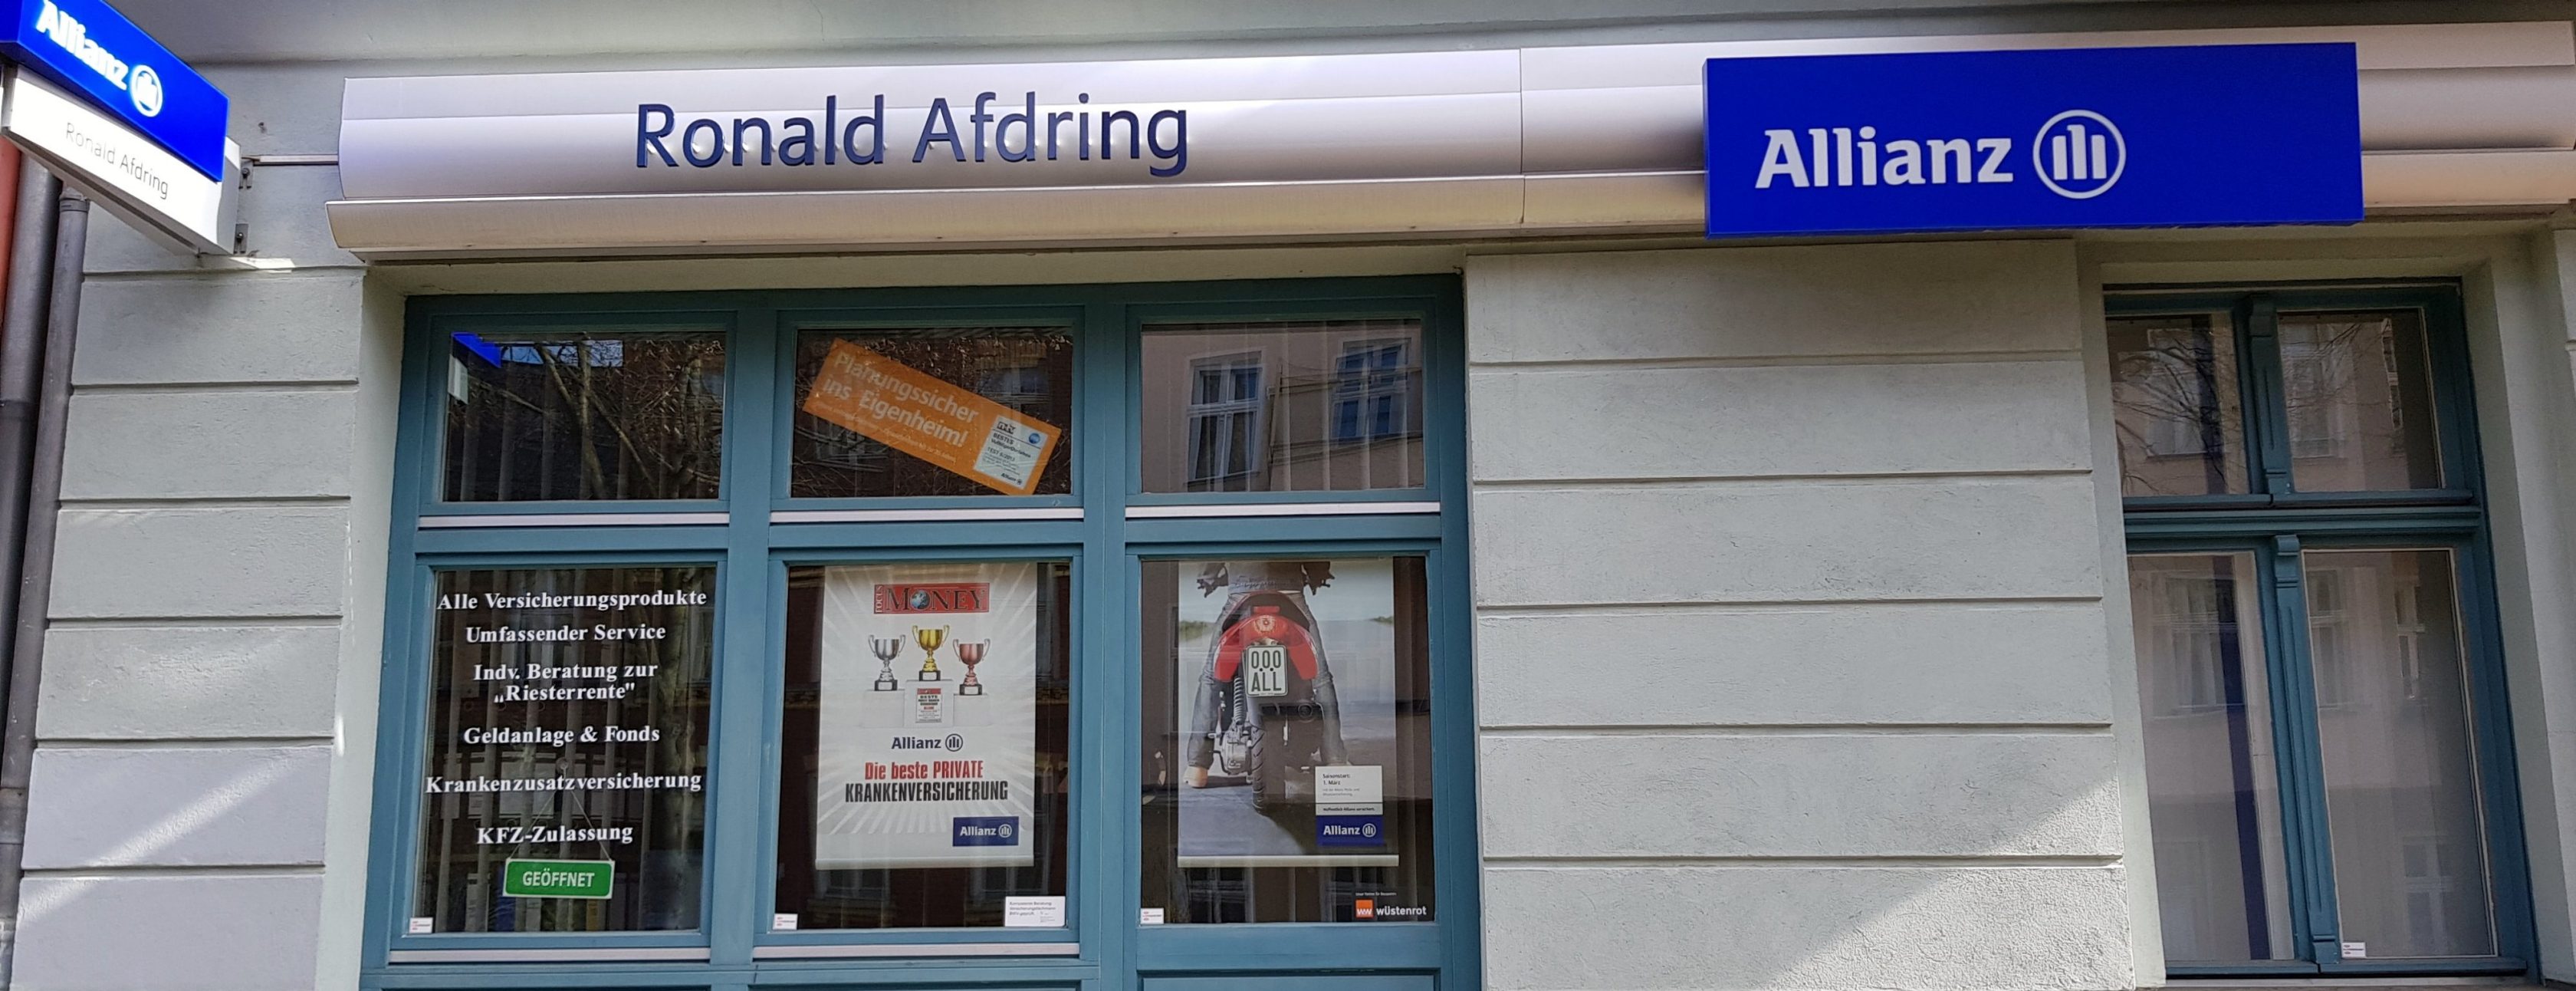 Allianz Versicherung Ronald Afdring Berlin - Besucheradresse: Ernststraße 26 - 12437 Berlin